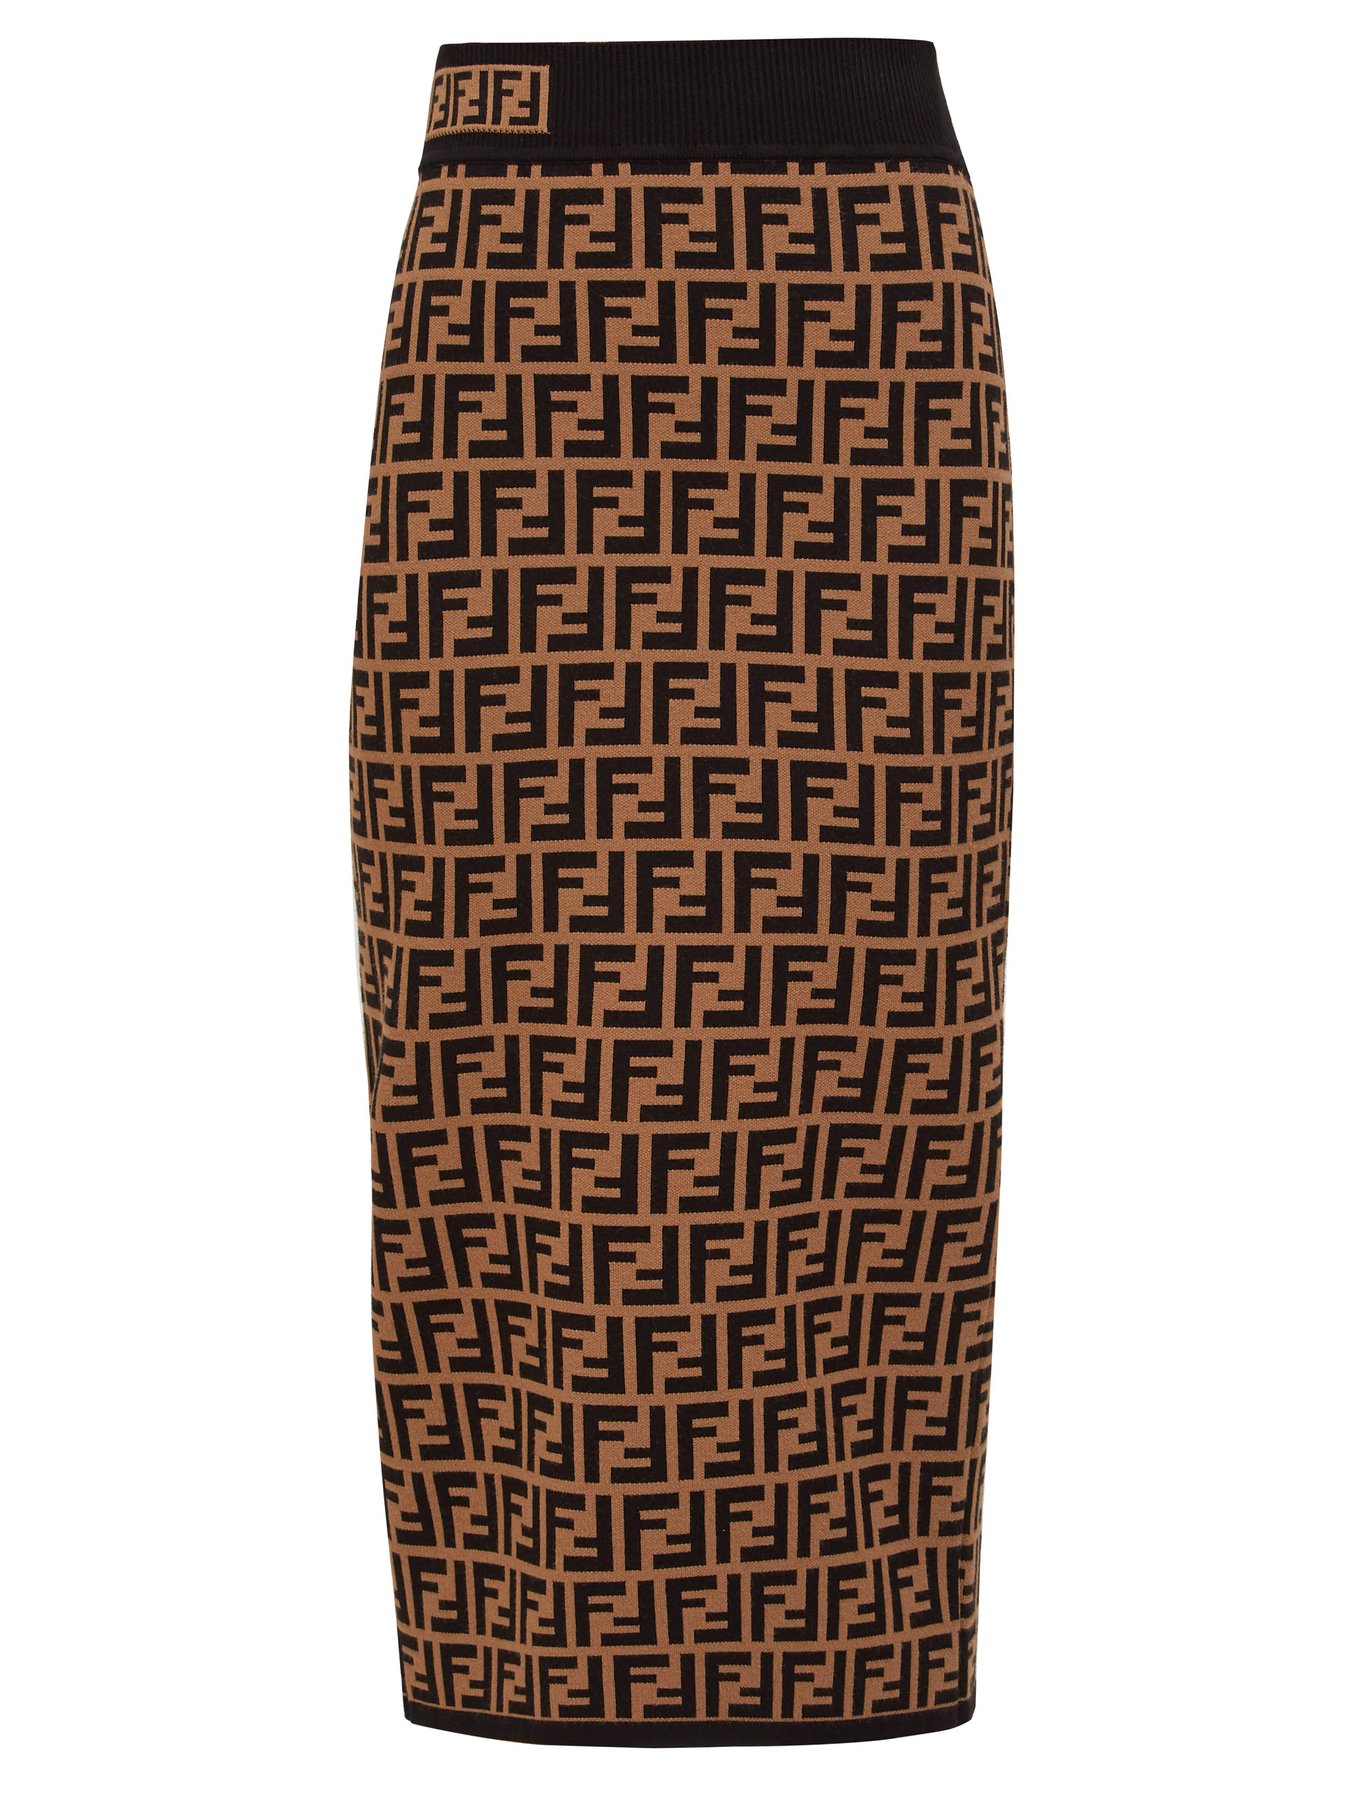 FF-jacquard high-rise knit pencil skirt 